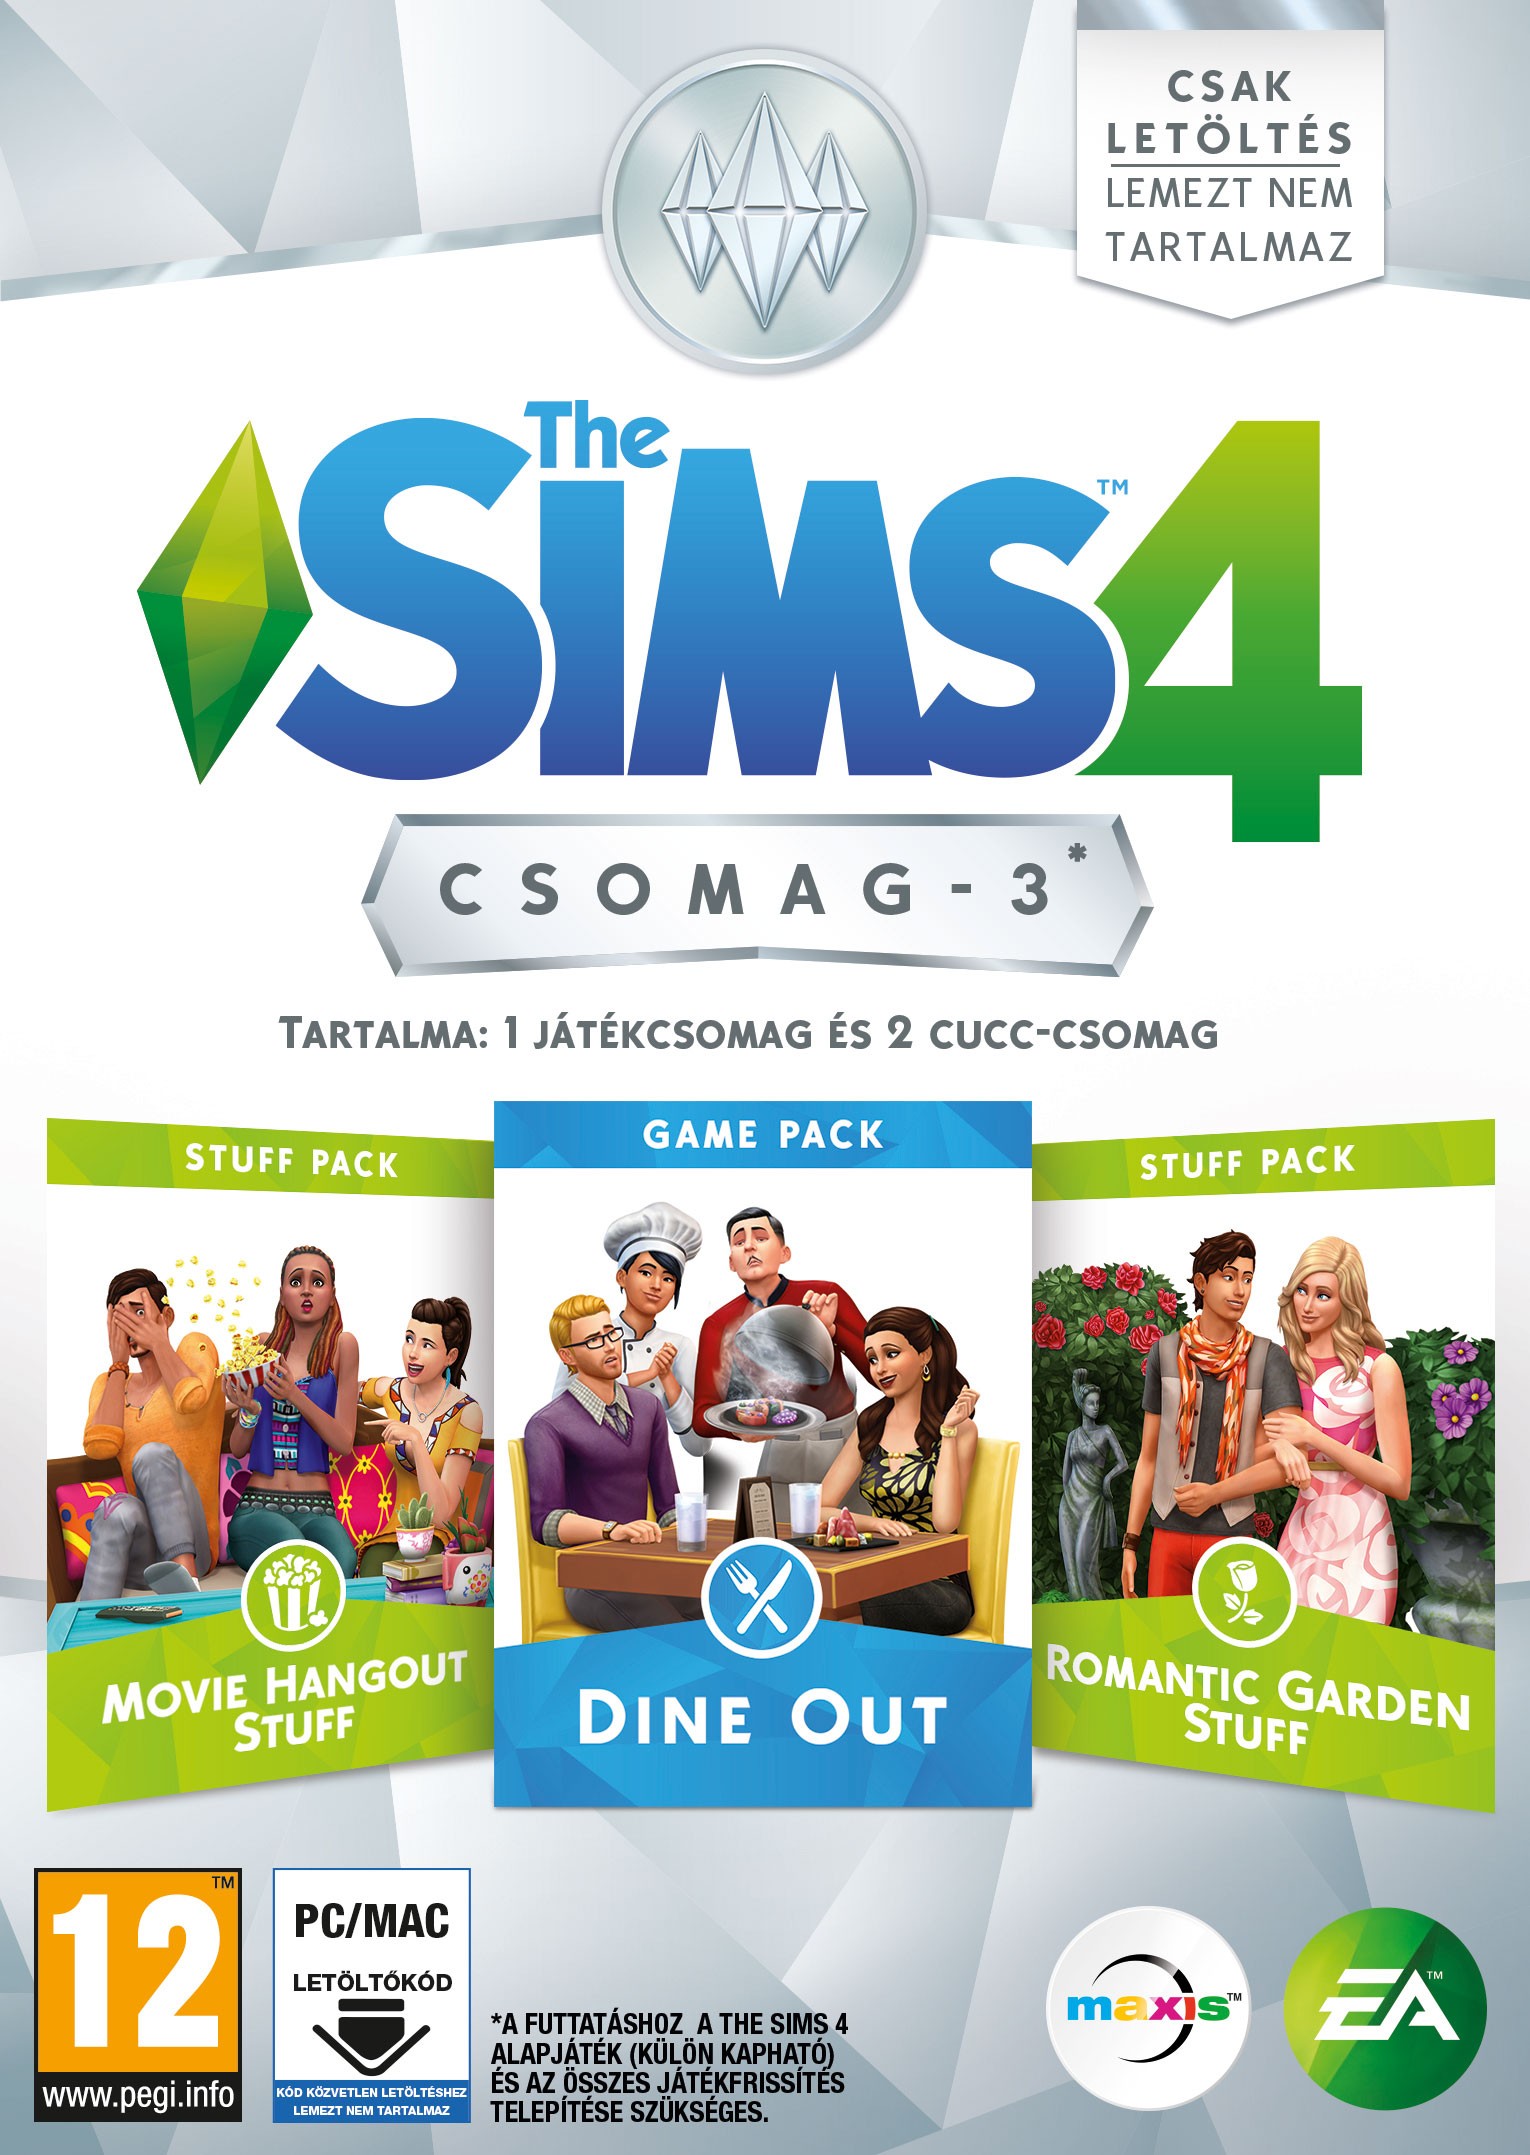 The Sims 4 csomag 3